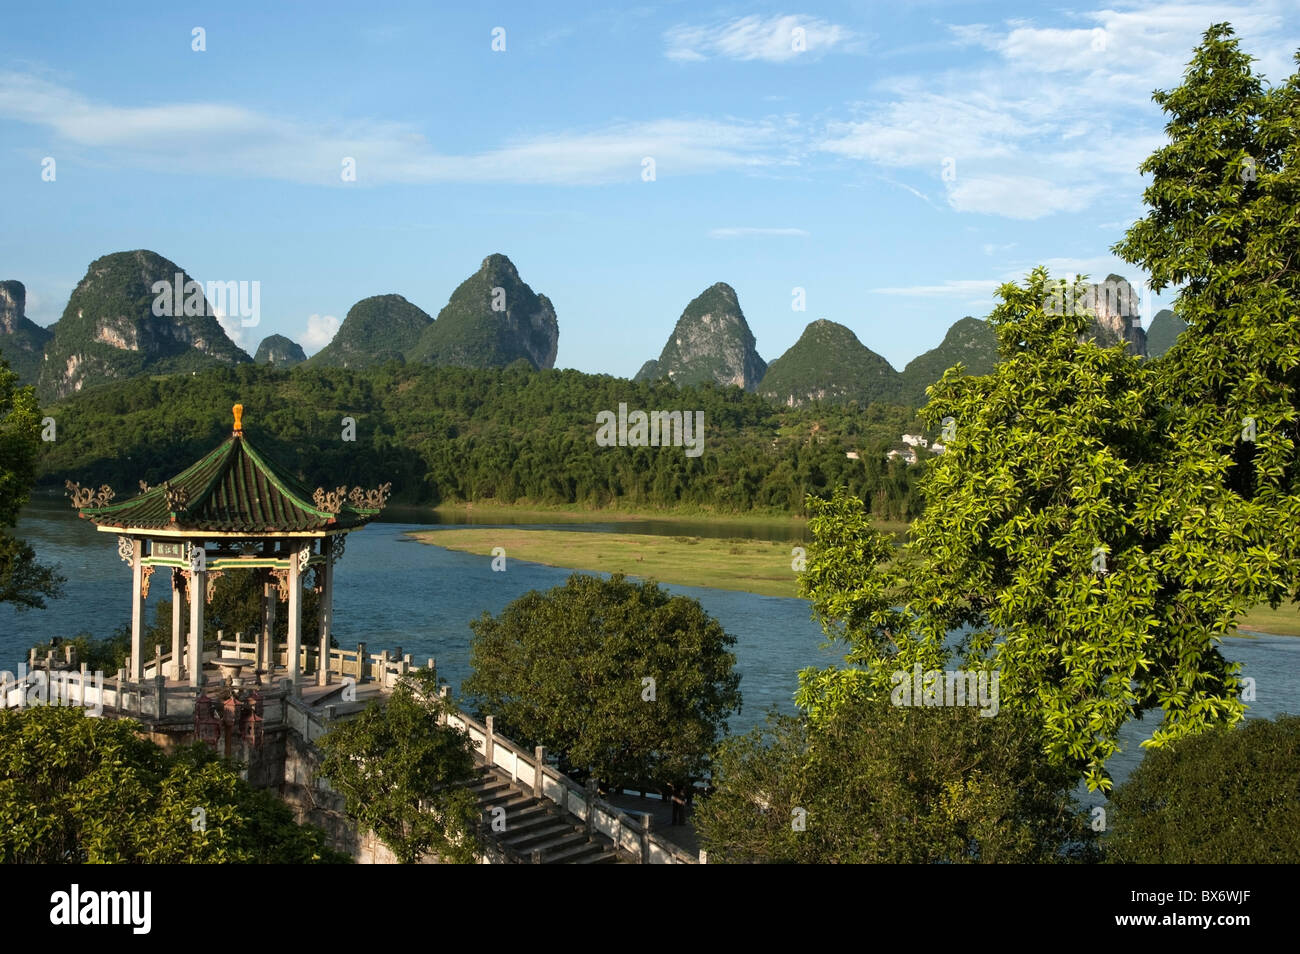 Fiume Li : tipico padiglione Cinese / pagoda sulle rive del fiume Li / Fiume Lijiang al tramonto, Yangshuo, Guangxi, Cina. Foto Stock